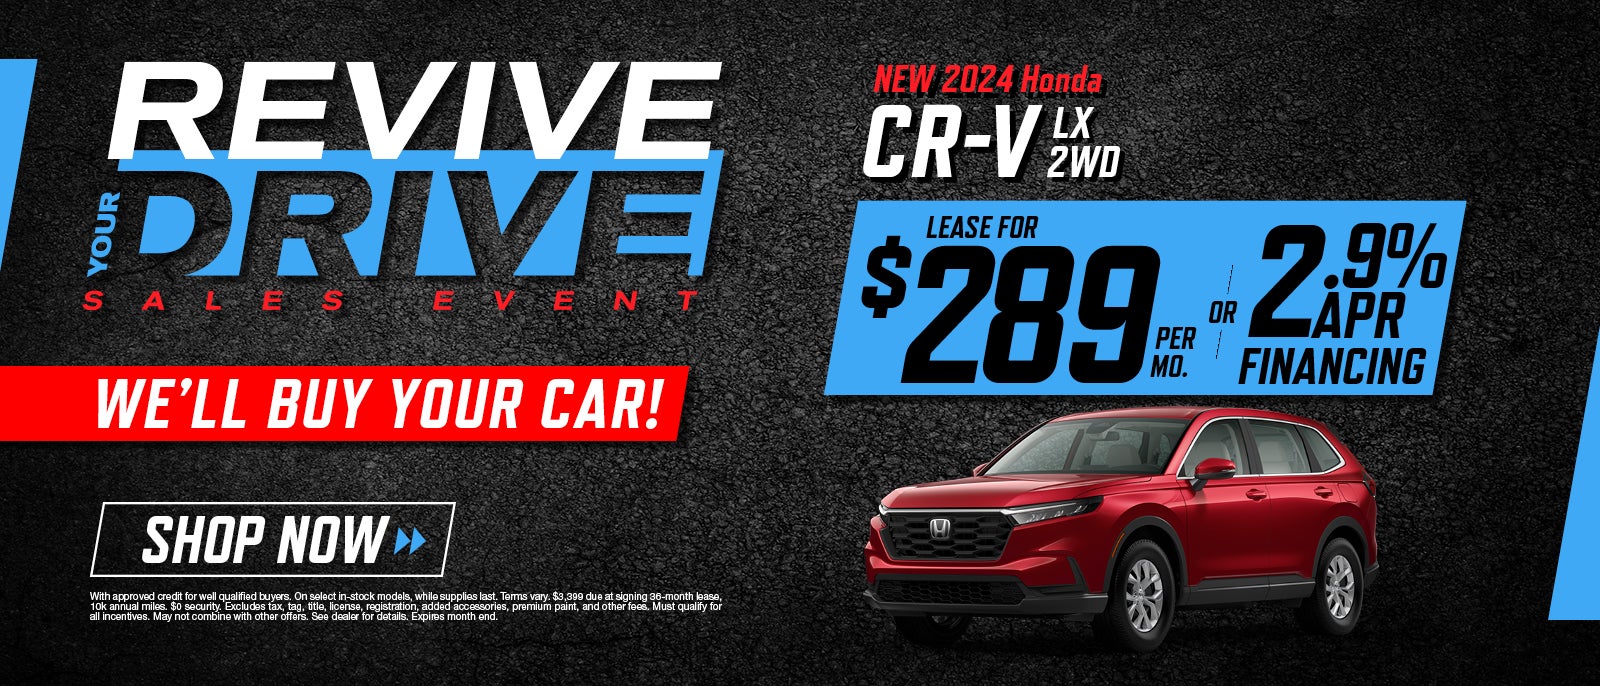 2024 Honda CR-V LX 2WD Lease for $289/mo